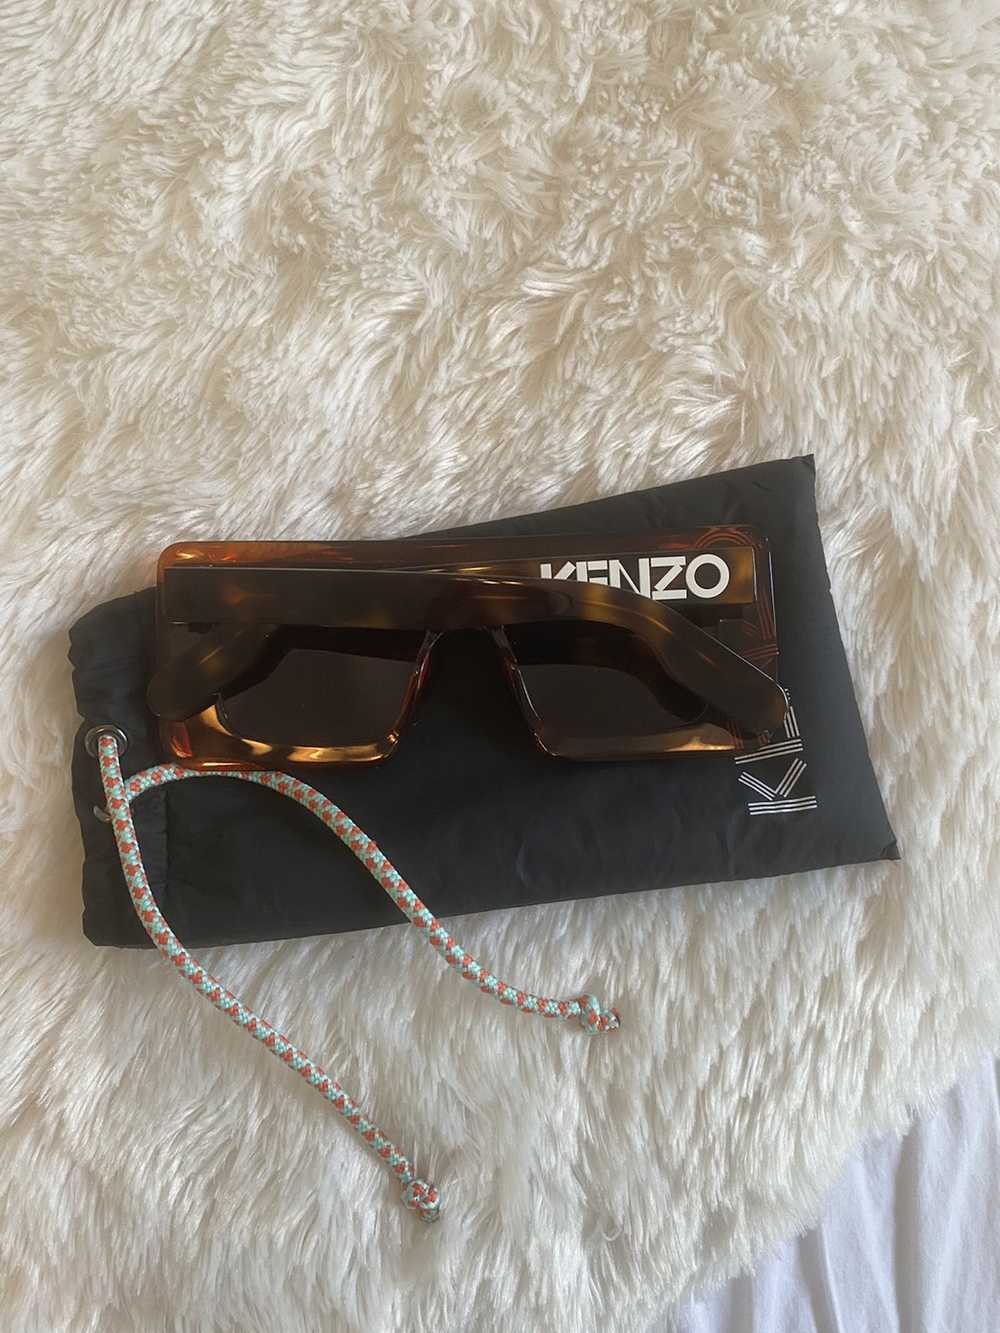 Kenzo Kenzo sunglasses - image 2